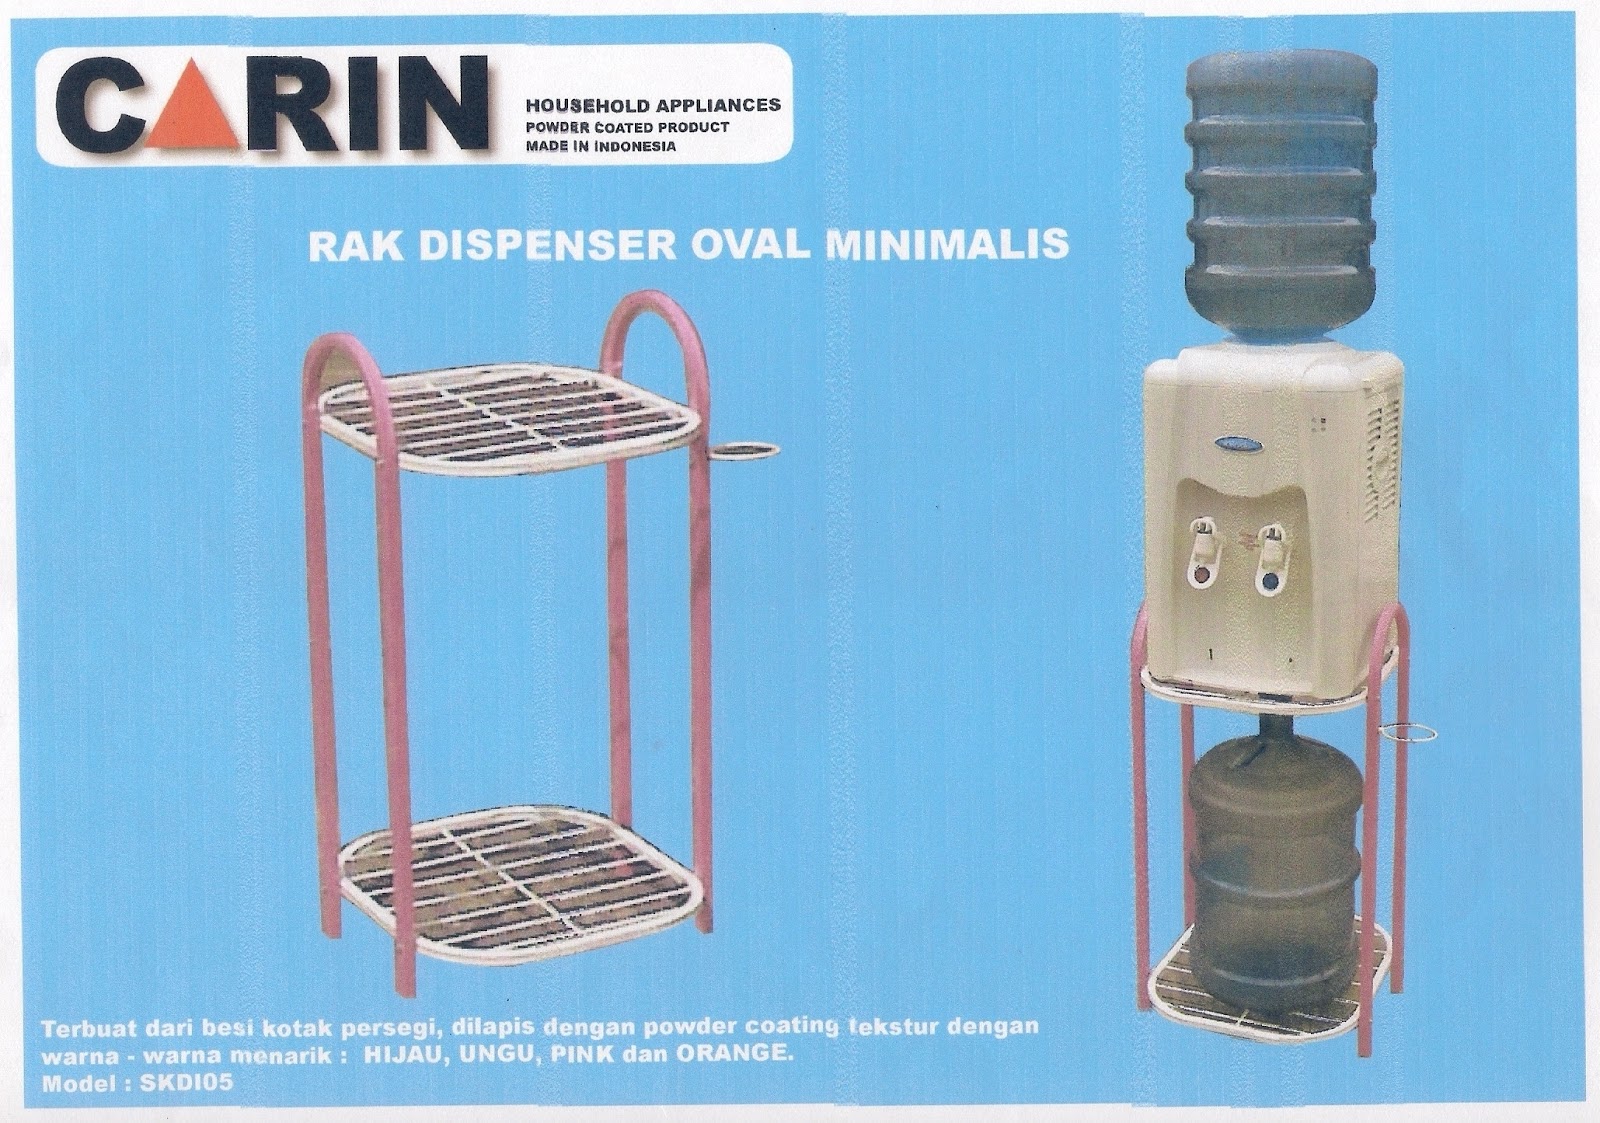  Rak  Magicom Dispenser  Oval Minimalis  CARIN INTERNASIONAL